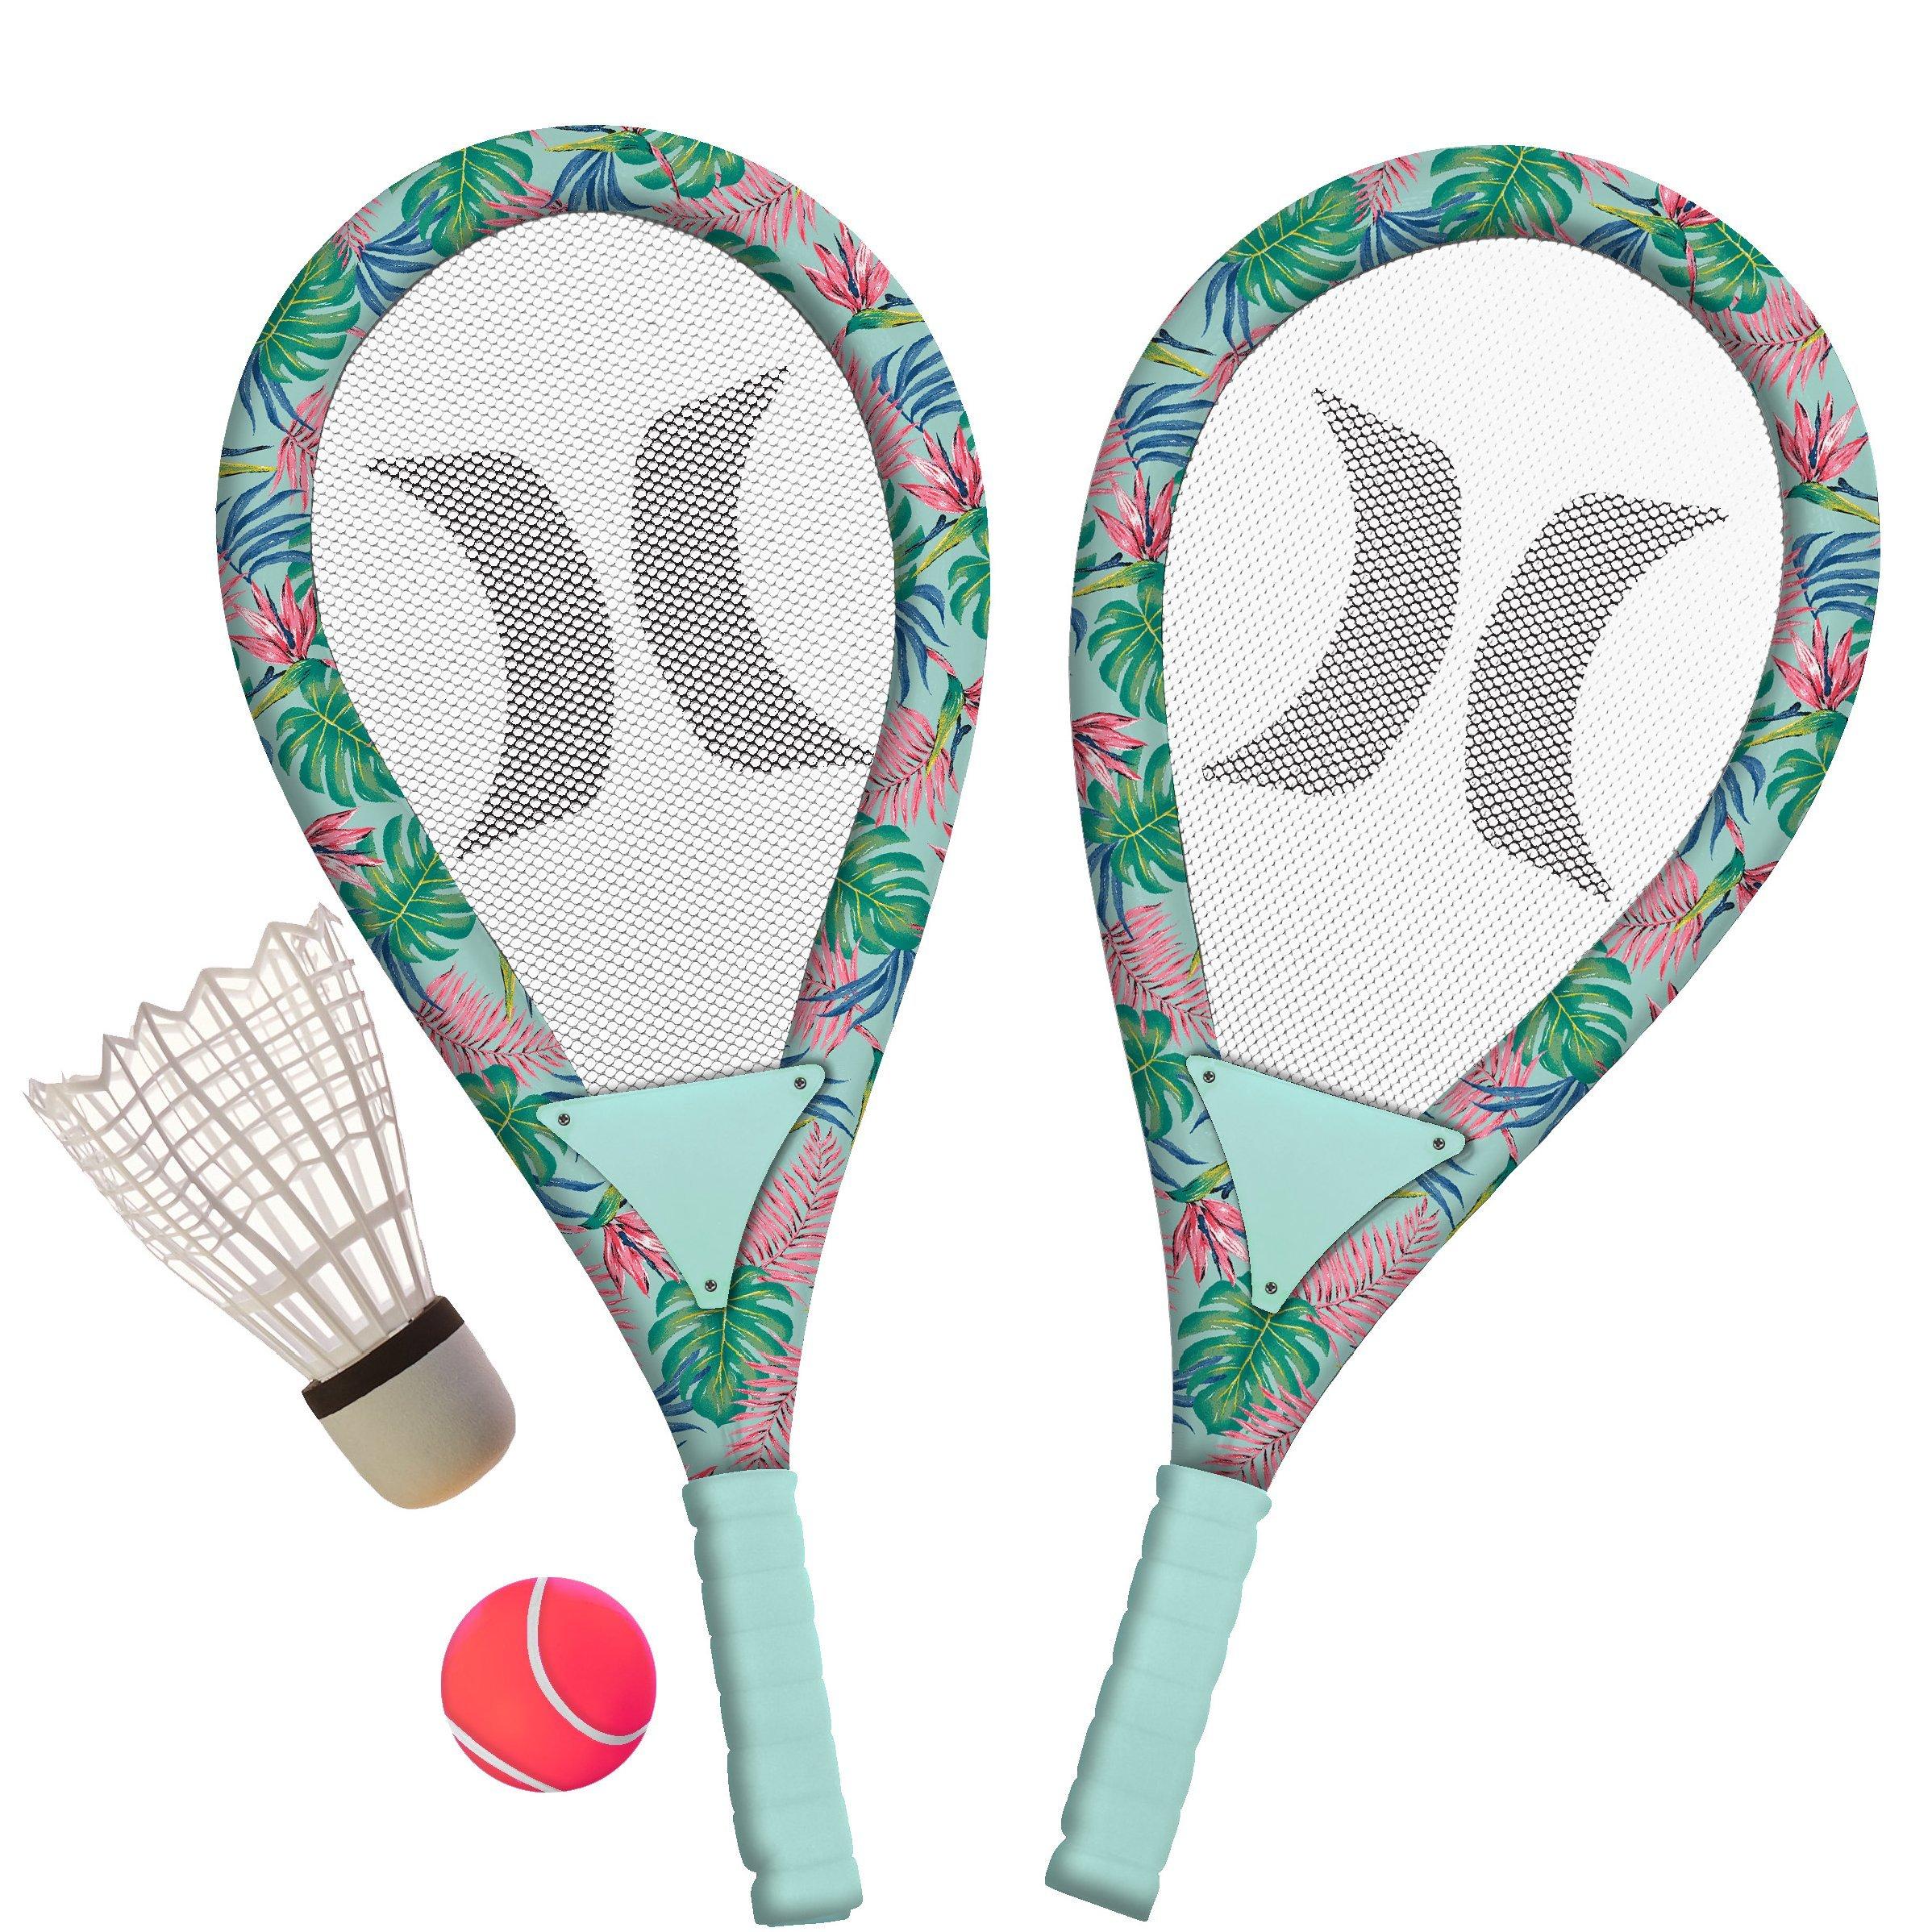 Hurley  Jumbo Tropical Teal Badminton Set